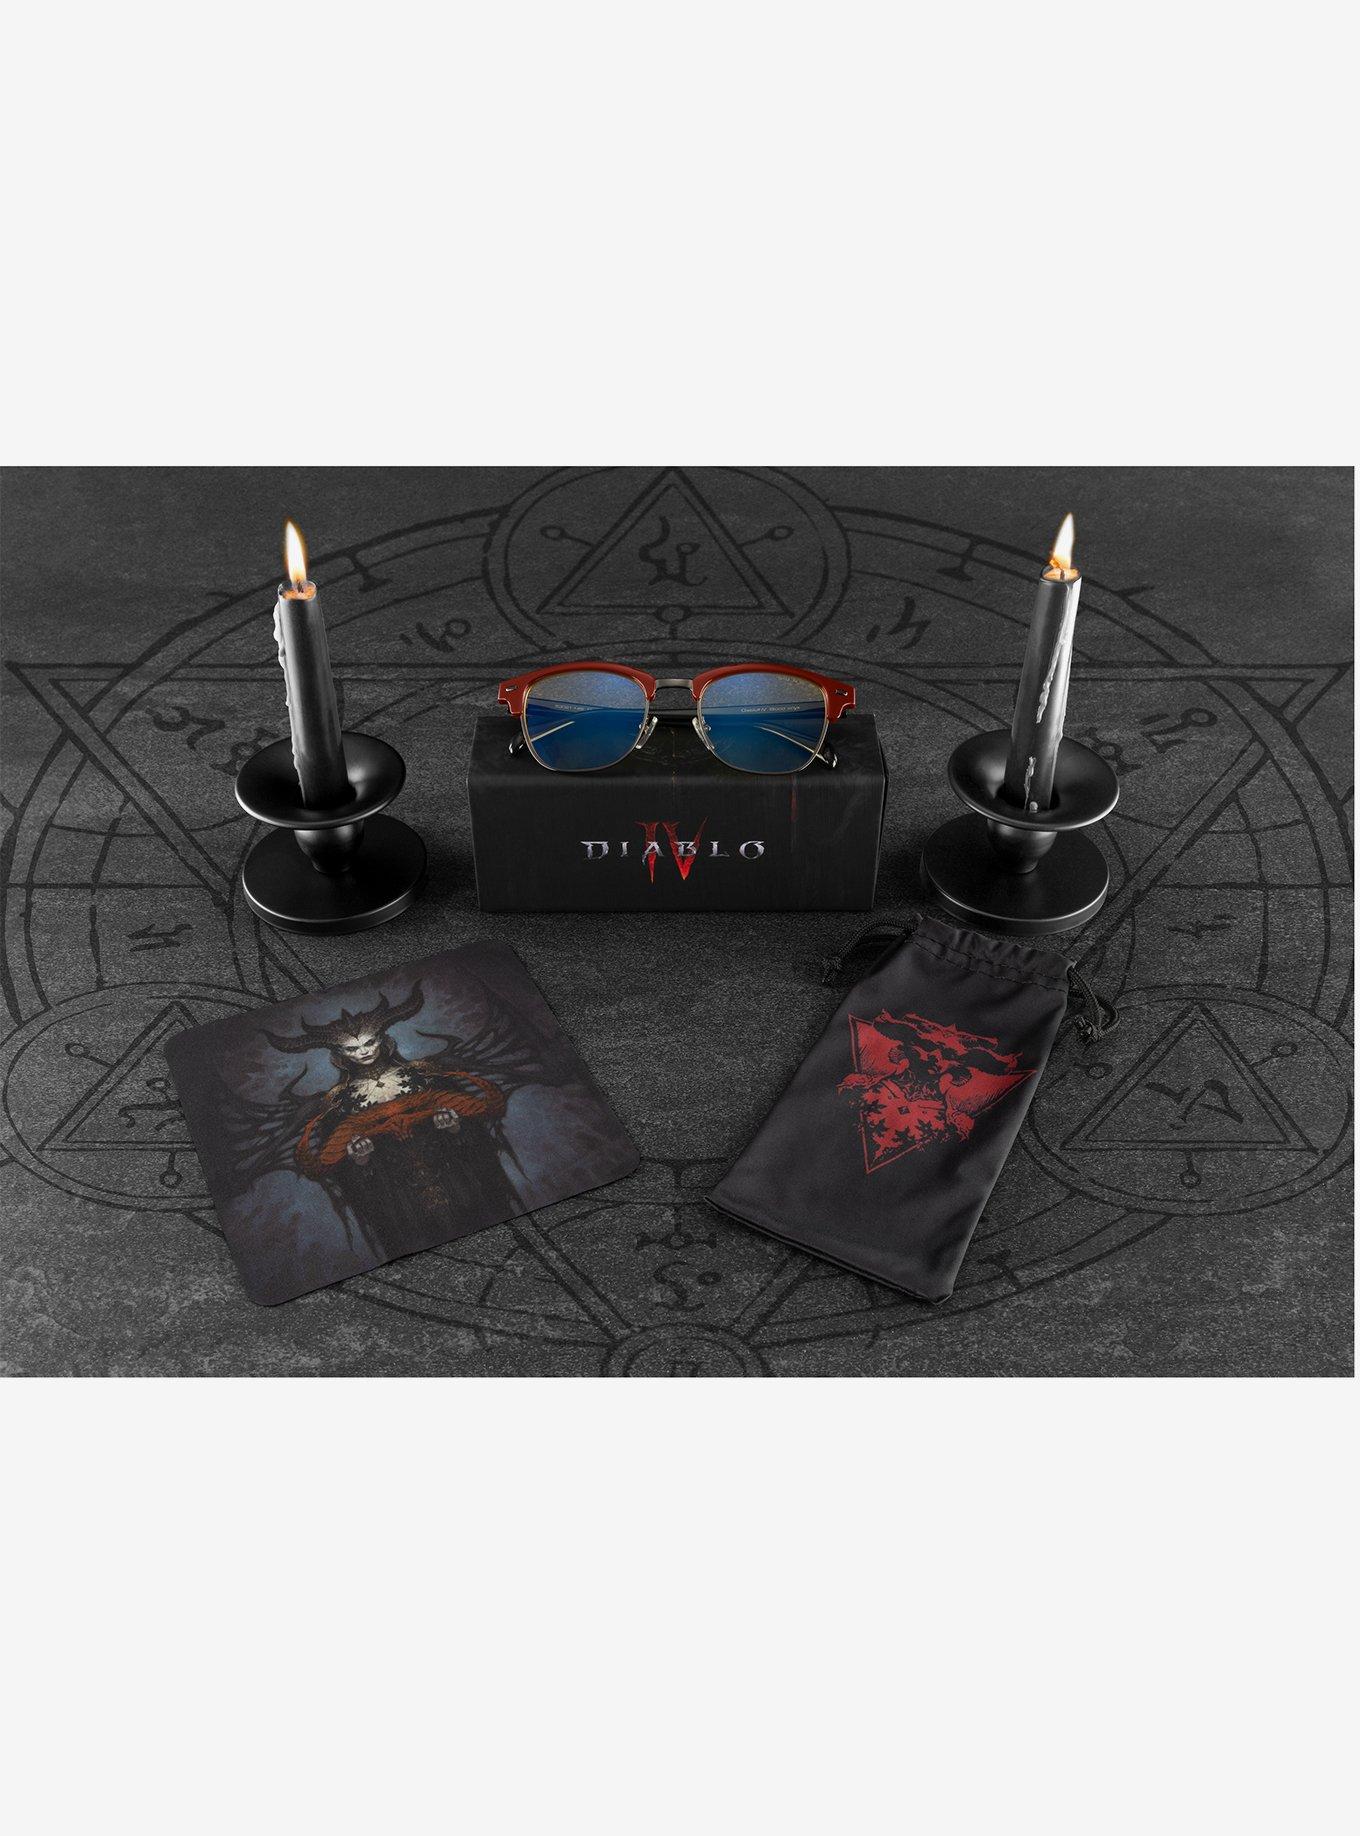 GUNNAR Diablo IV Sanctuary Edition Blue Light Glasses, , alternate